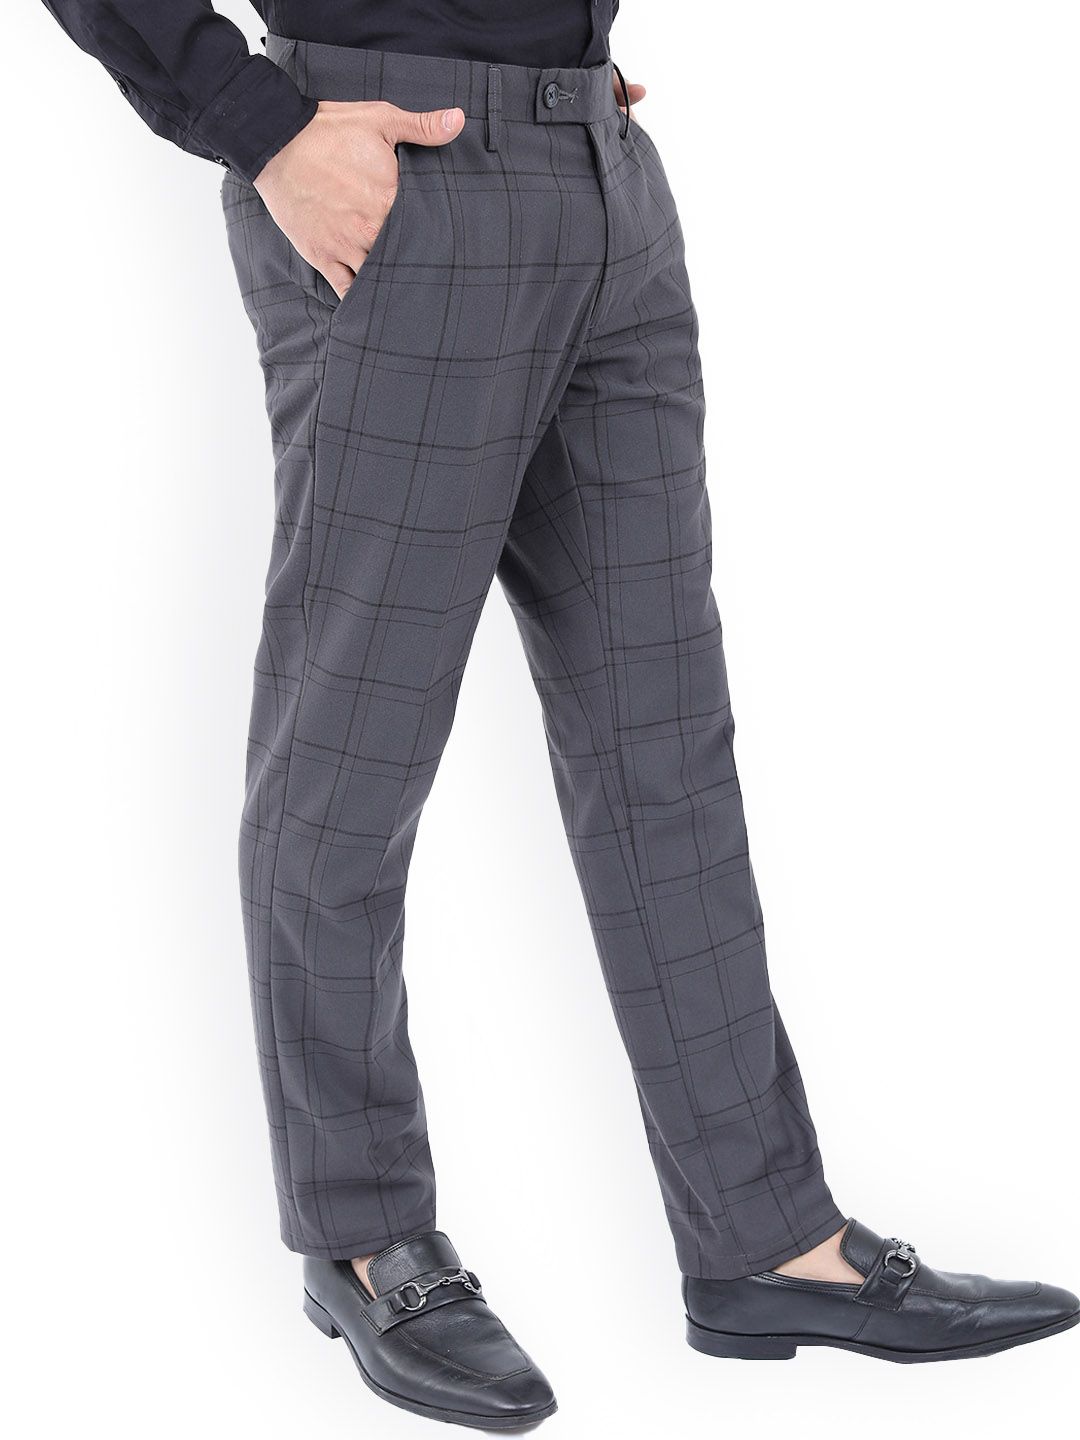 Buy Highlander Boa Chinos Trouser for Men Online at Rs849  Ketch